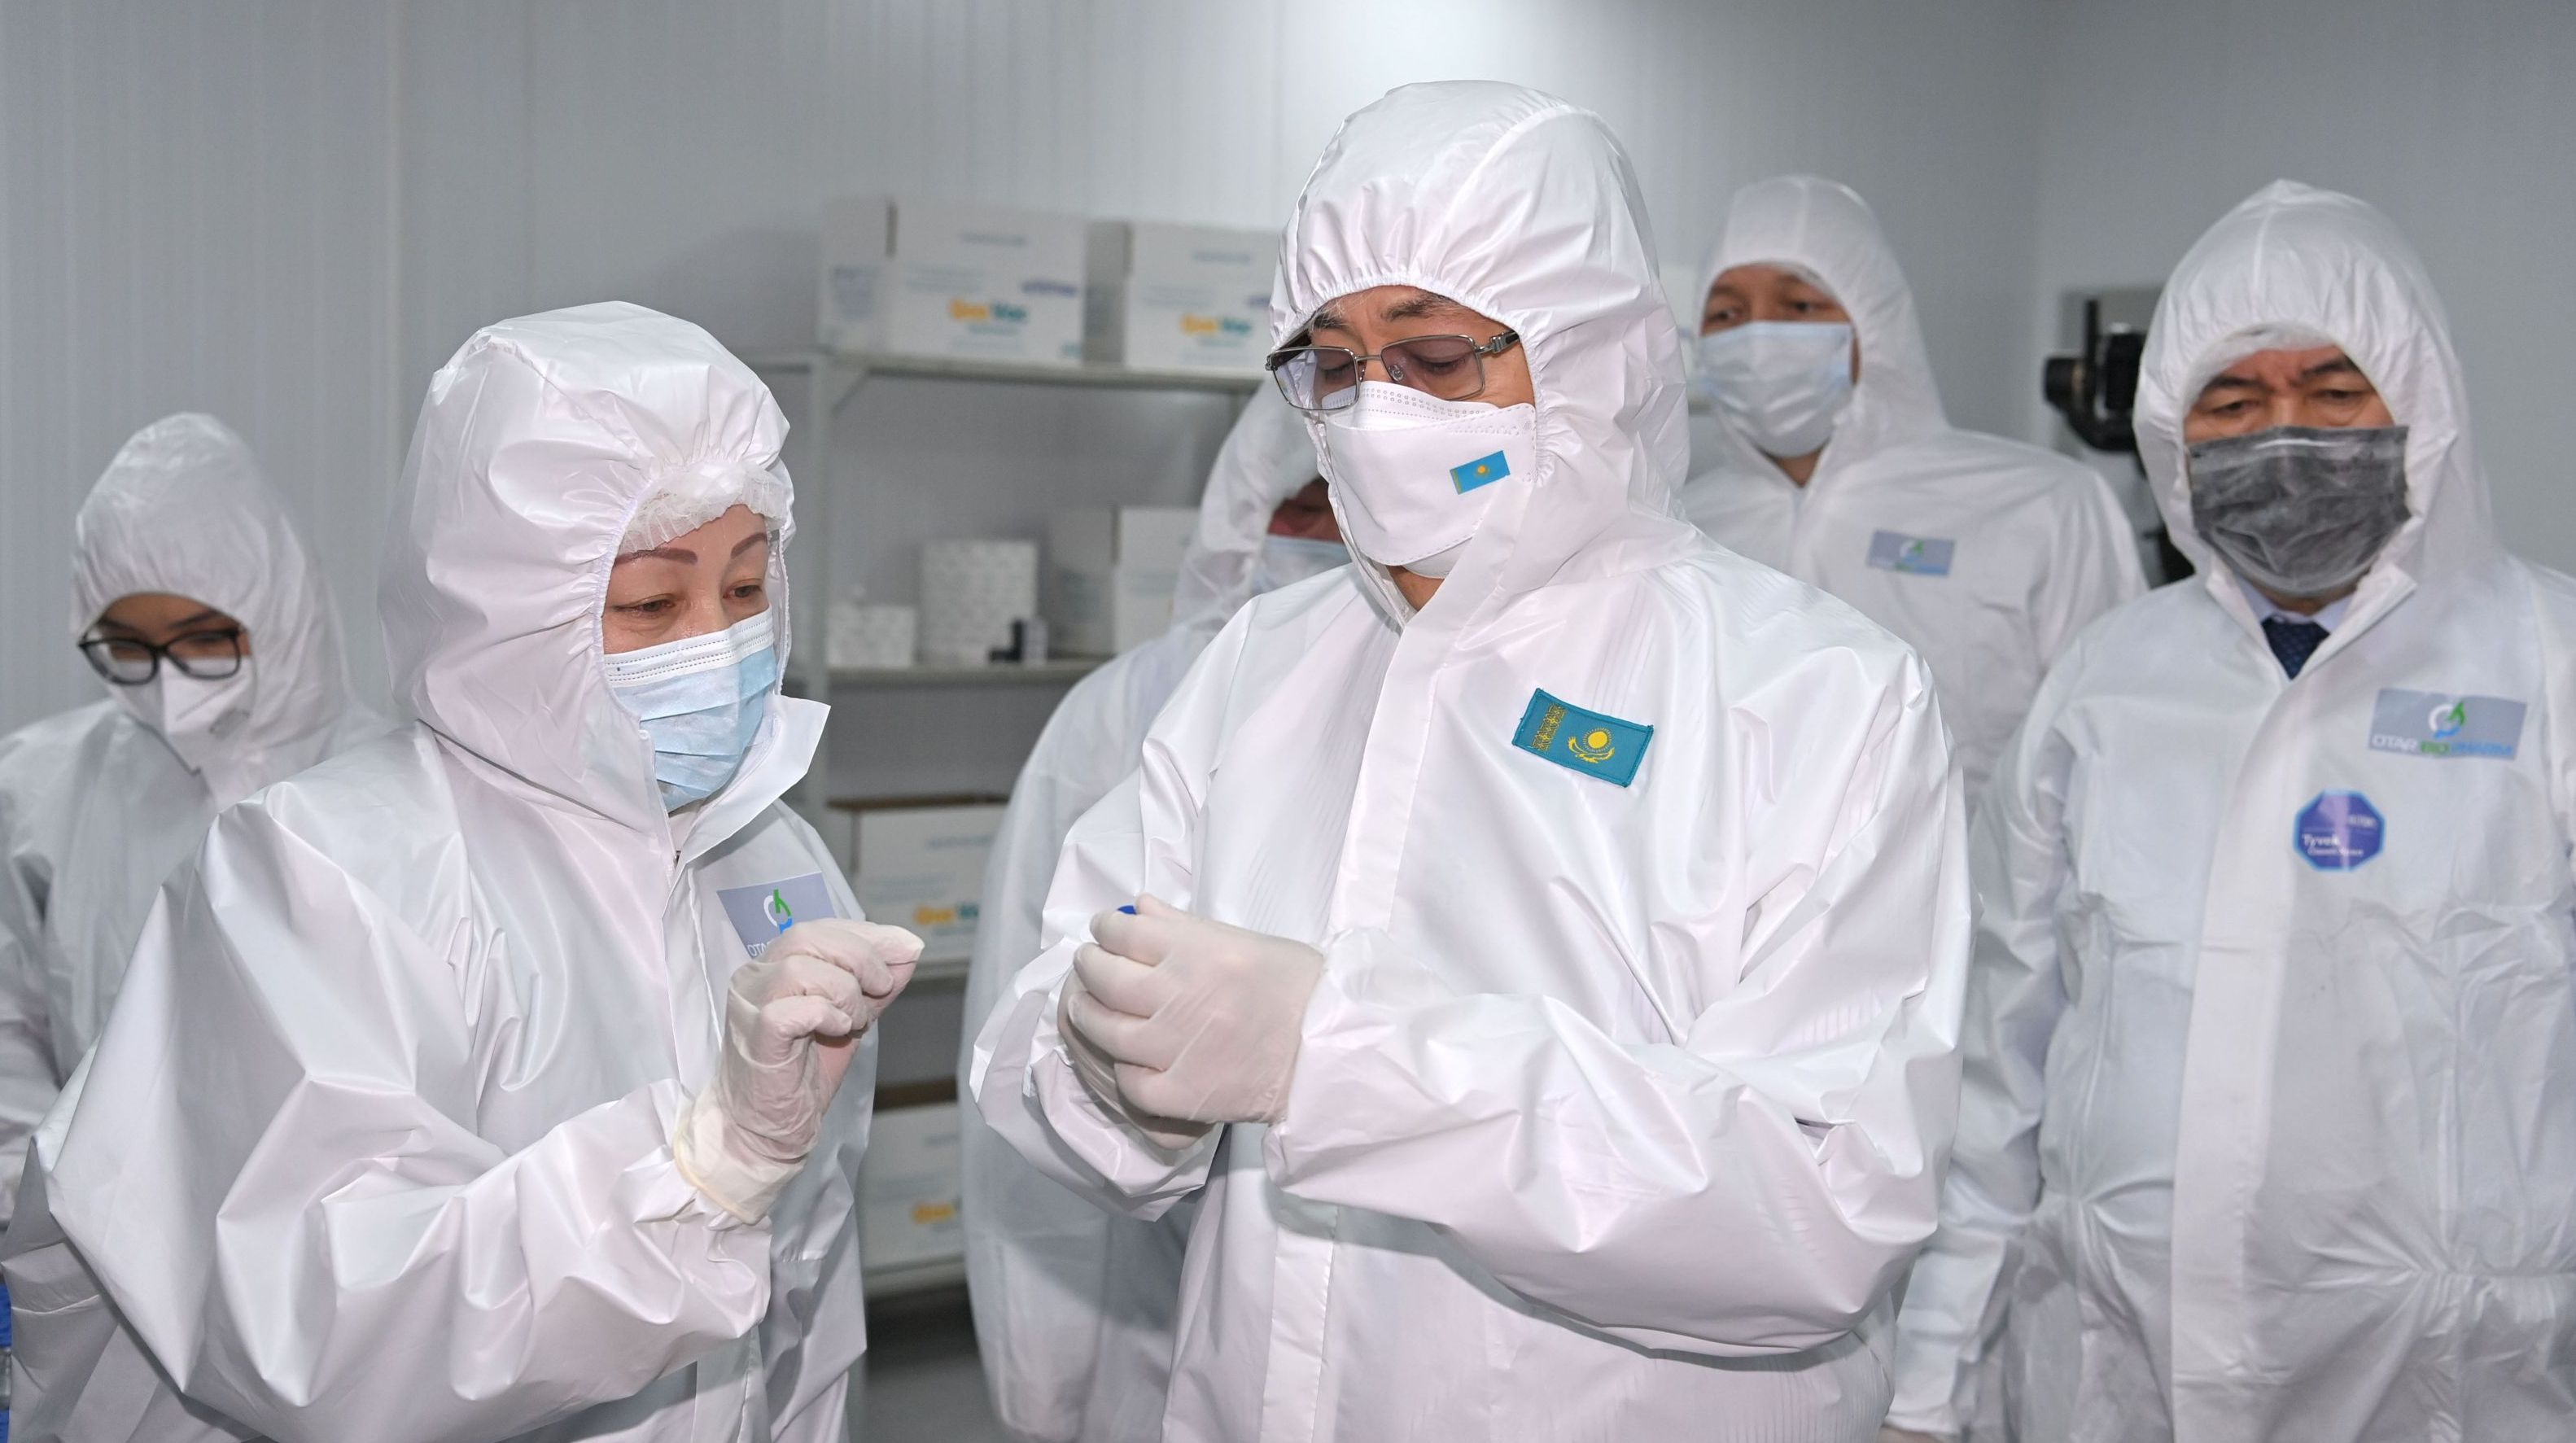 Токаев посетил биофармацевтический завод Otarbiopharm